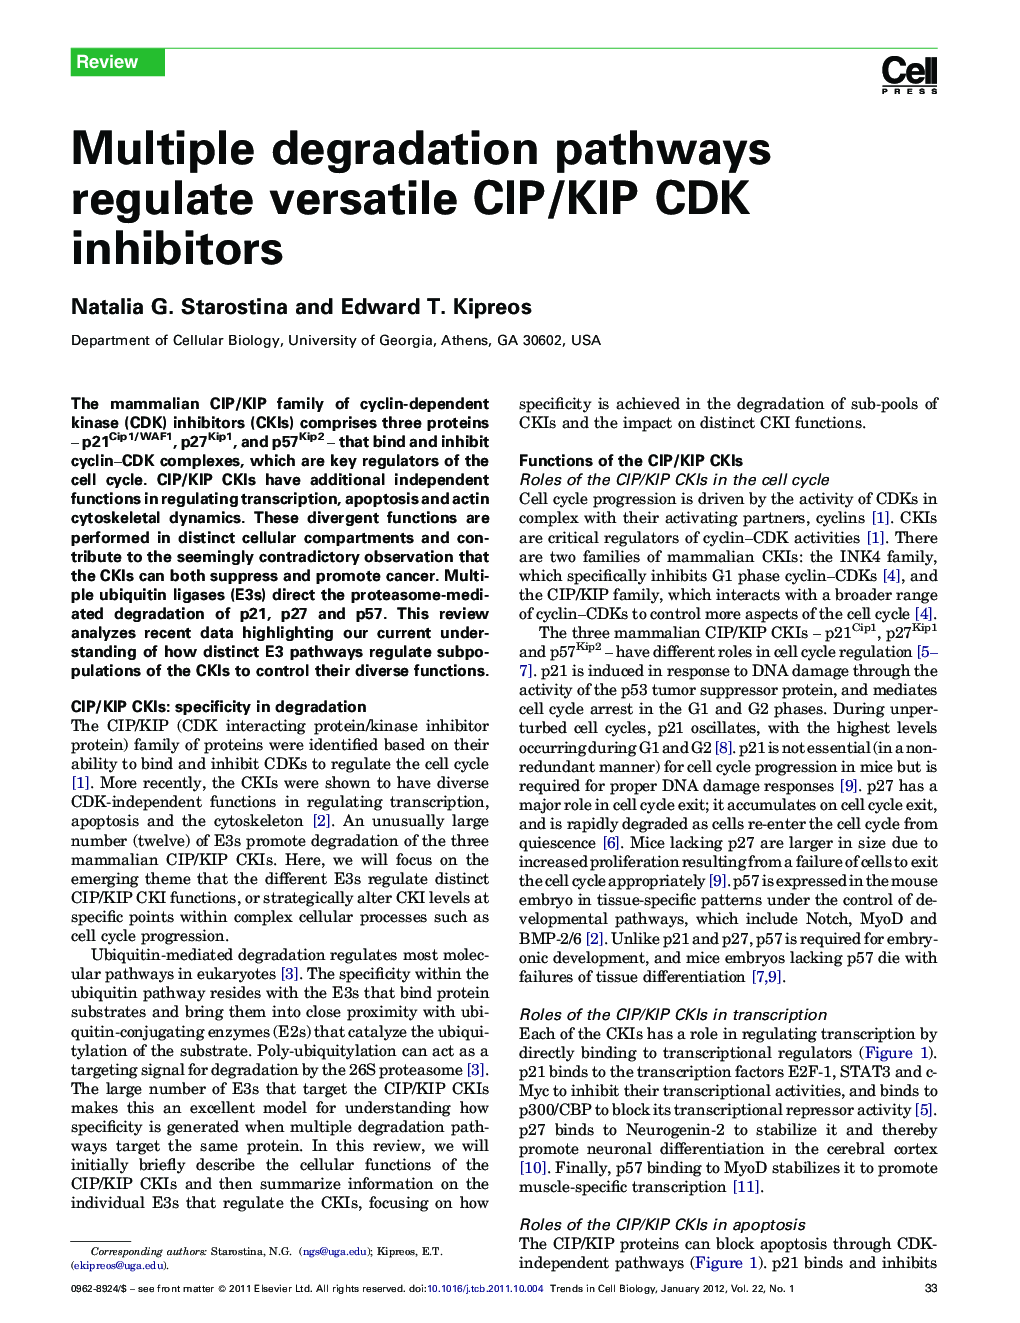 Multiple degradation pathways regulate versatile CIP/KIP CDK inhibitors